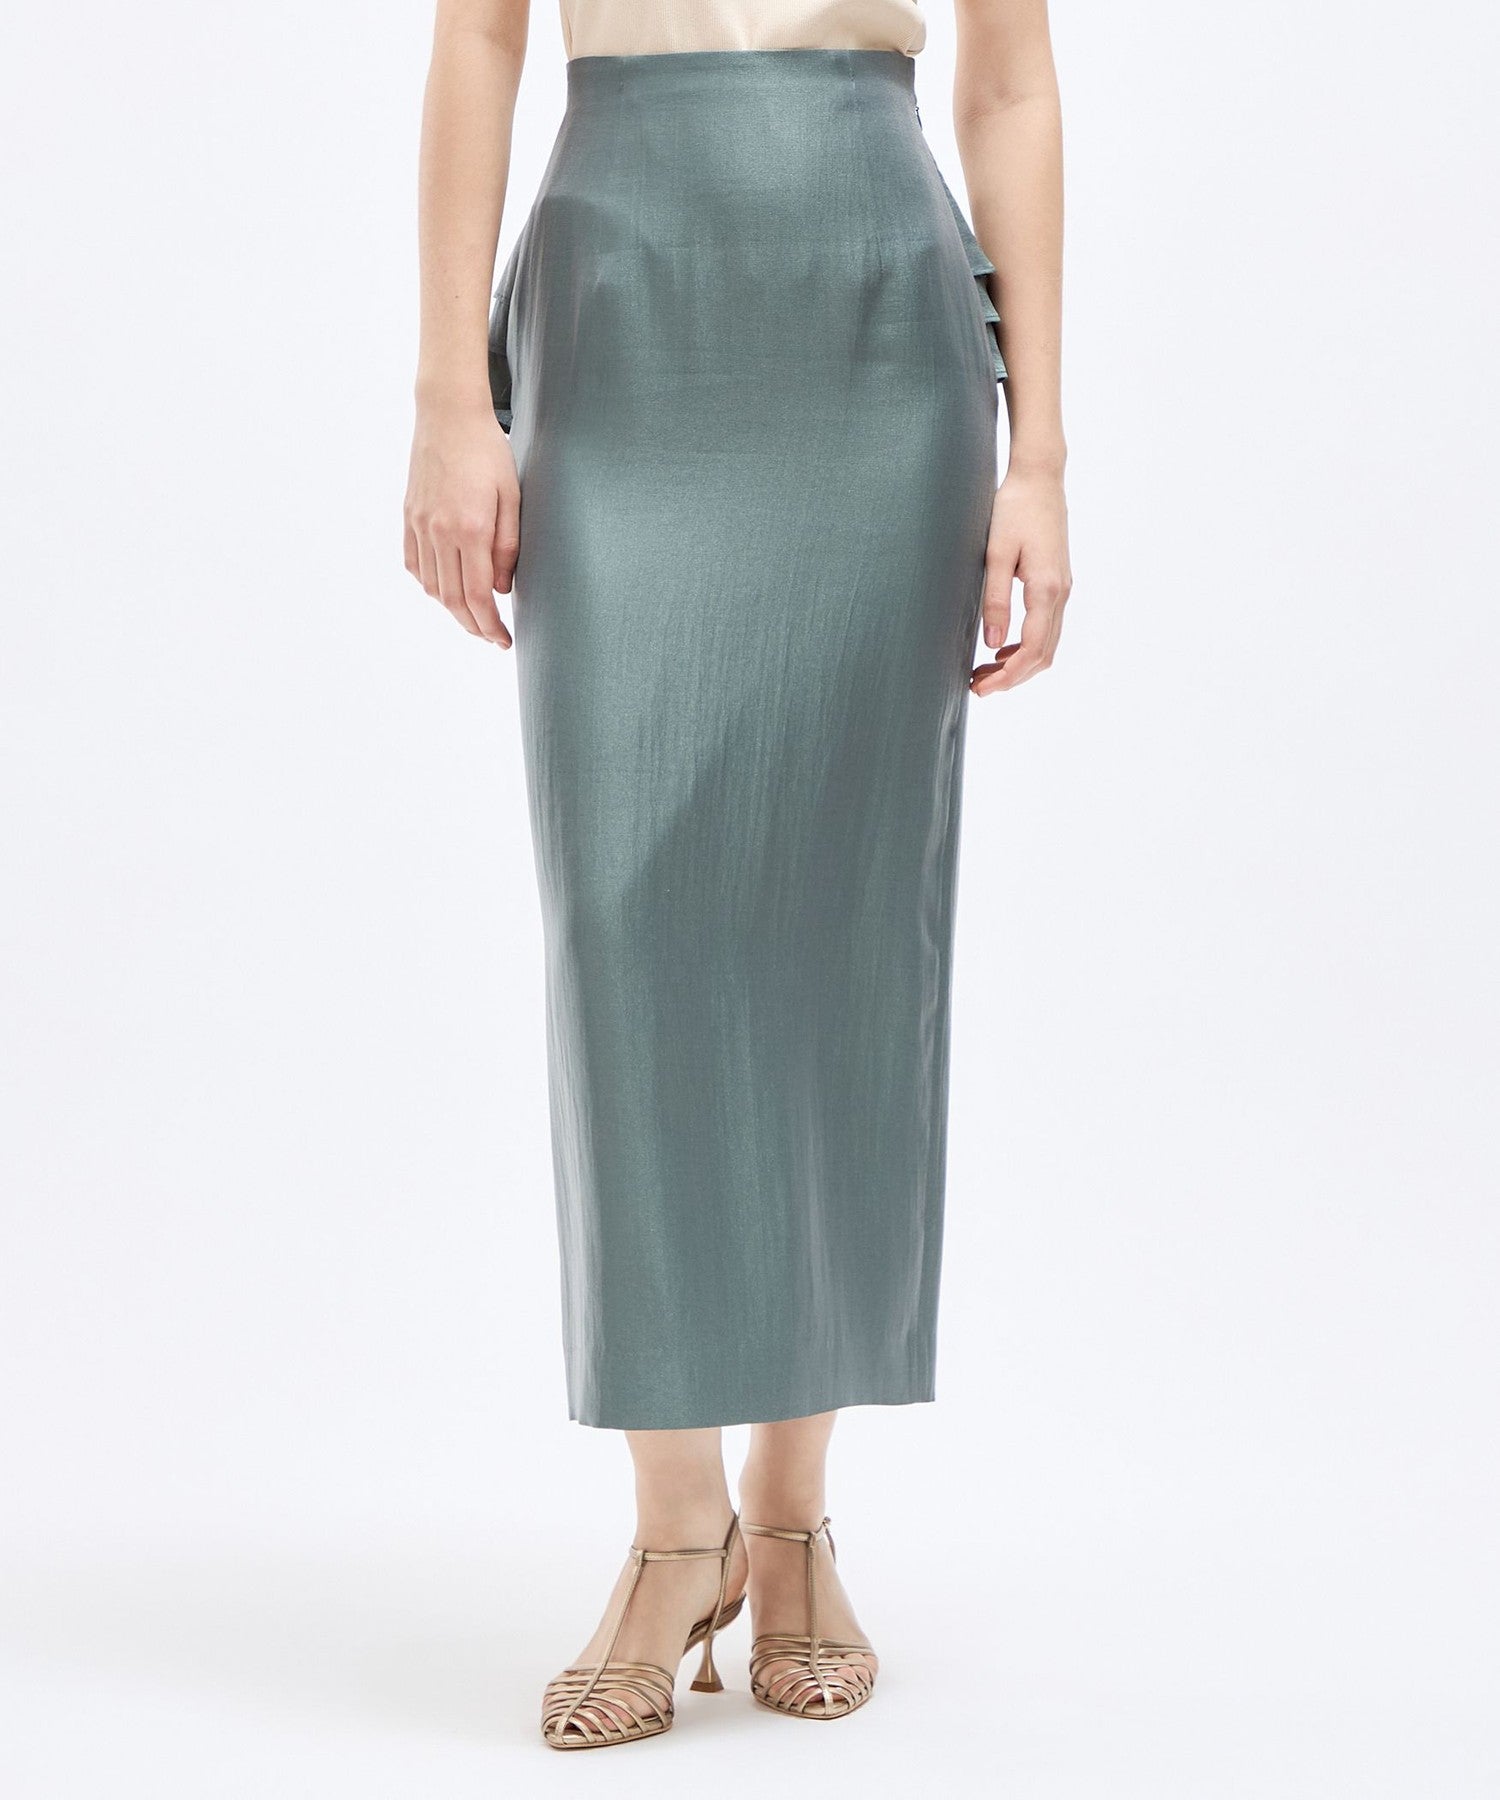 Shiny Buckpplam Skirt